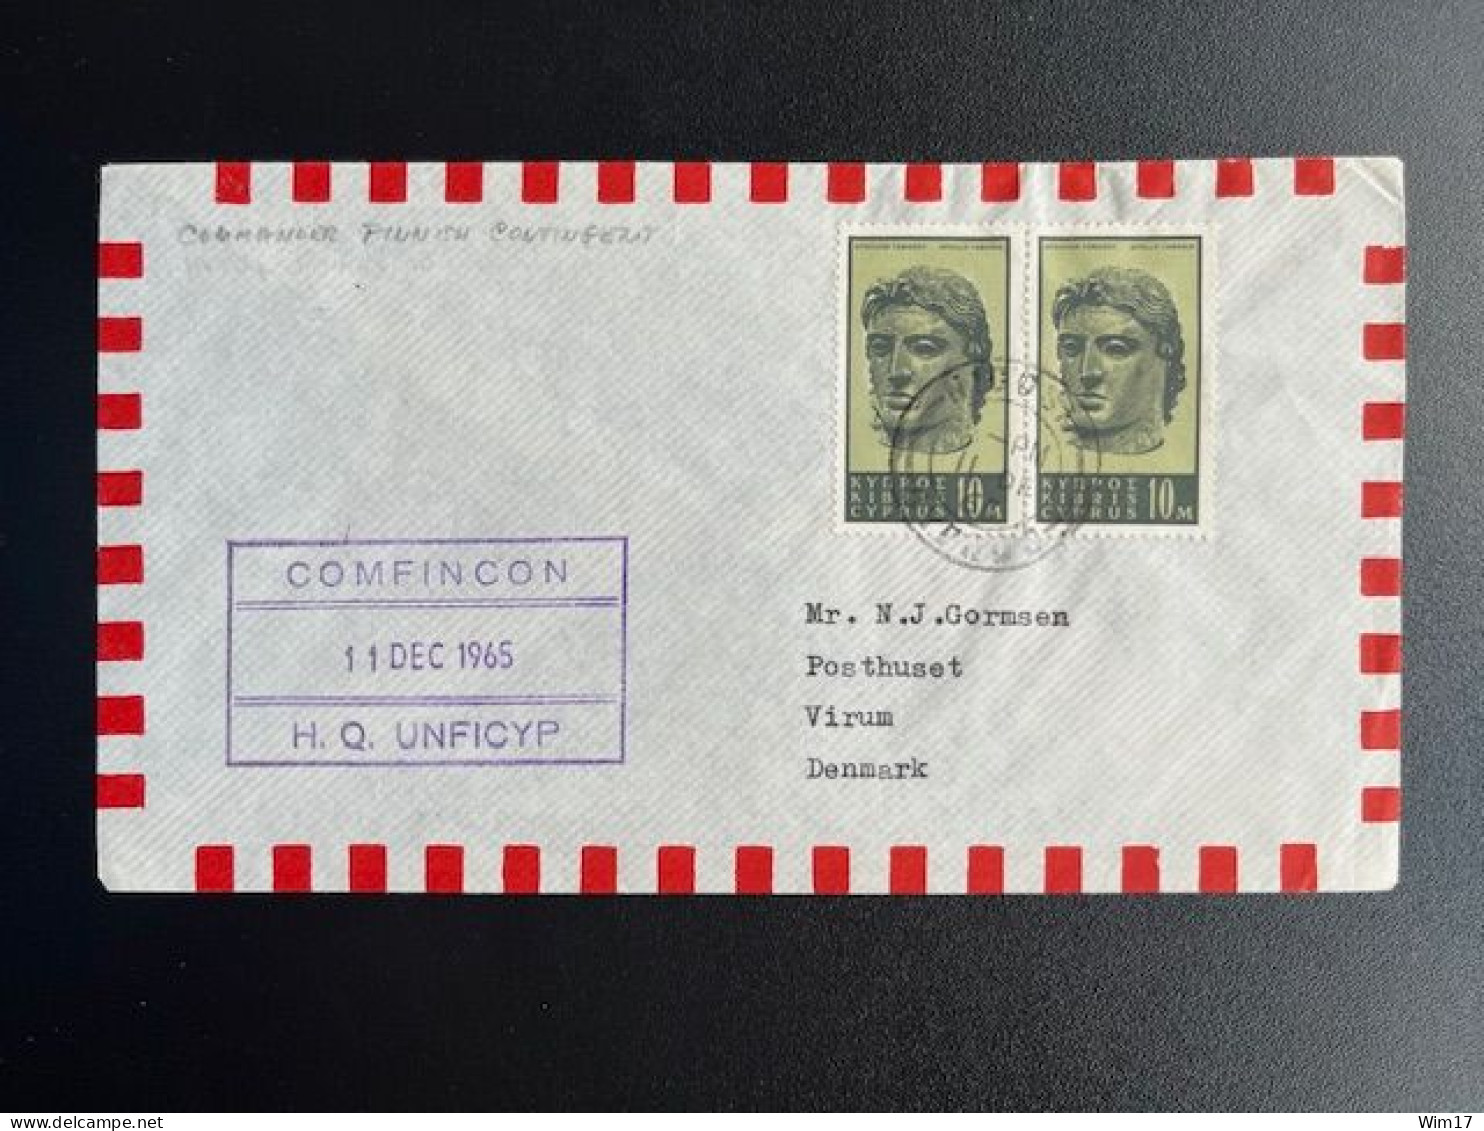 CYPRUS KIBRIS 1965 AIR MAIL LETTER NICOSIA TO VIRUM 11-12-1965 COMFINCON UNFICYP - Lettres & Documents